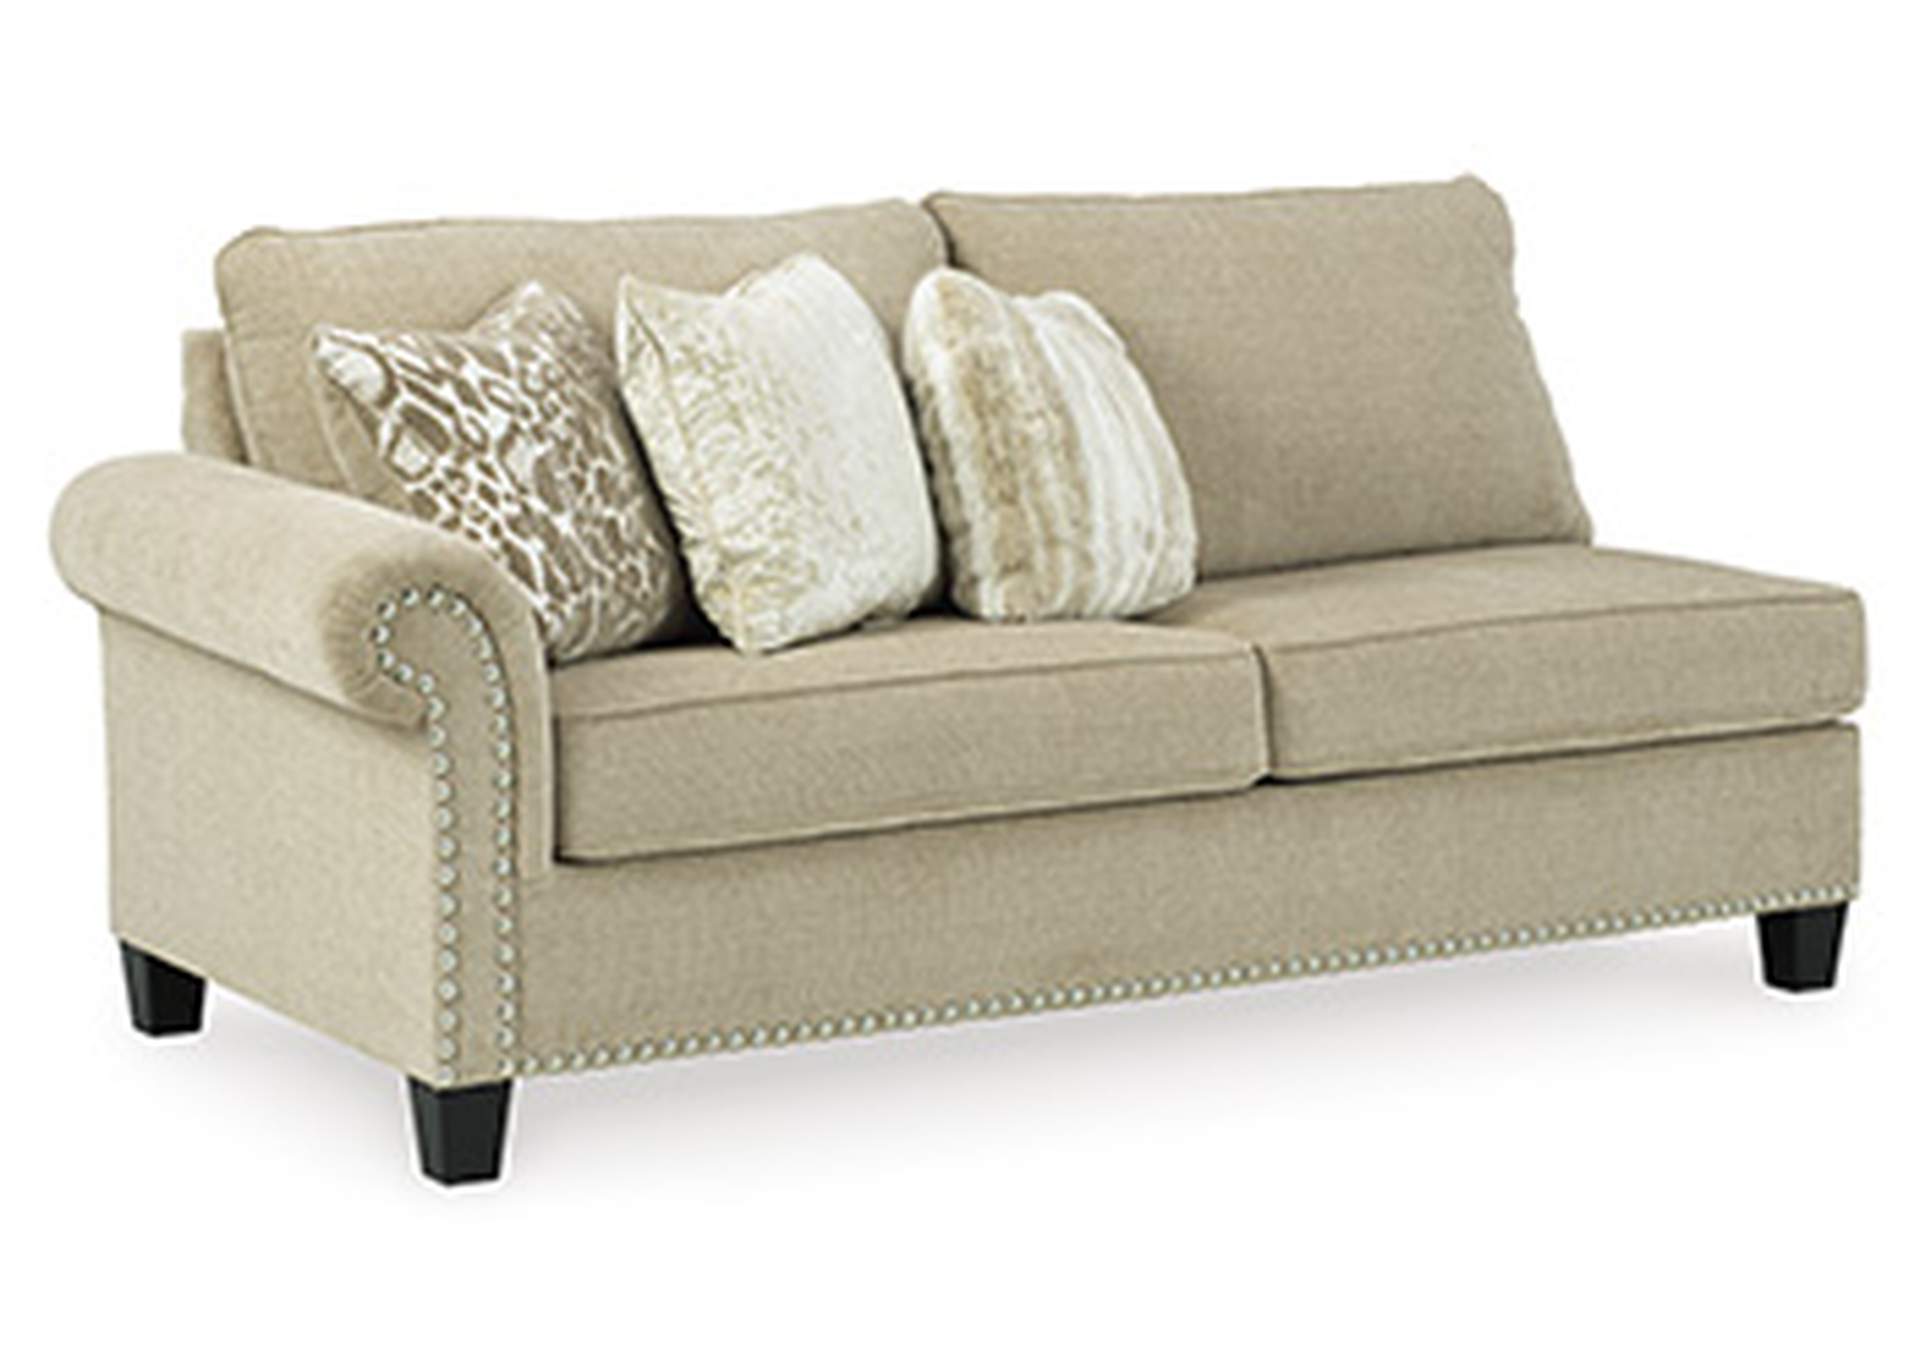 Dovemont Left-Arm Facing Sofa,Signature Design By Ashley